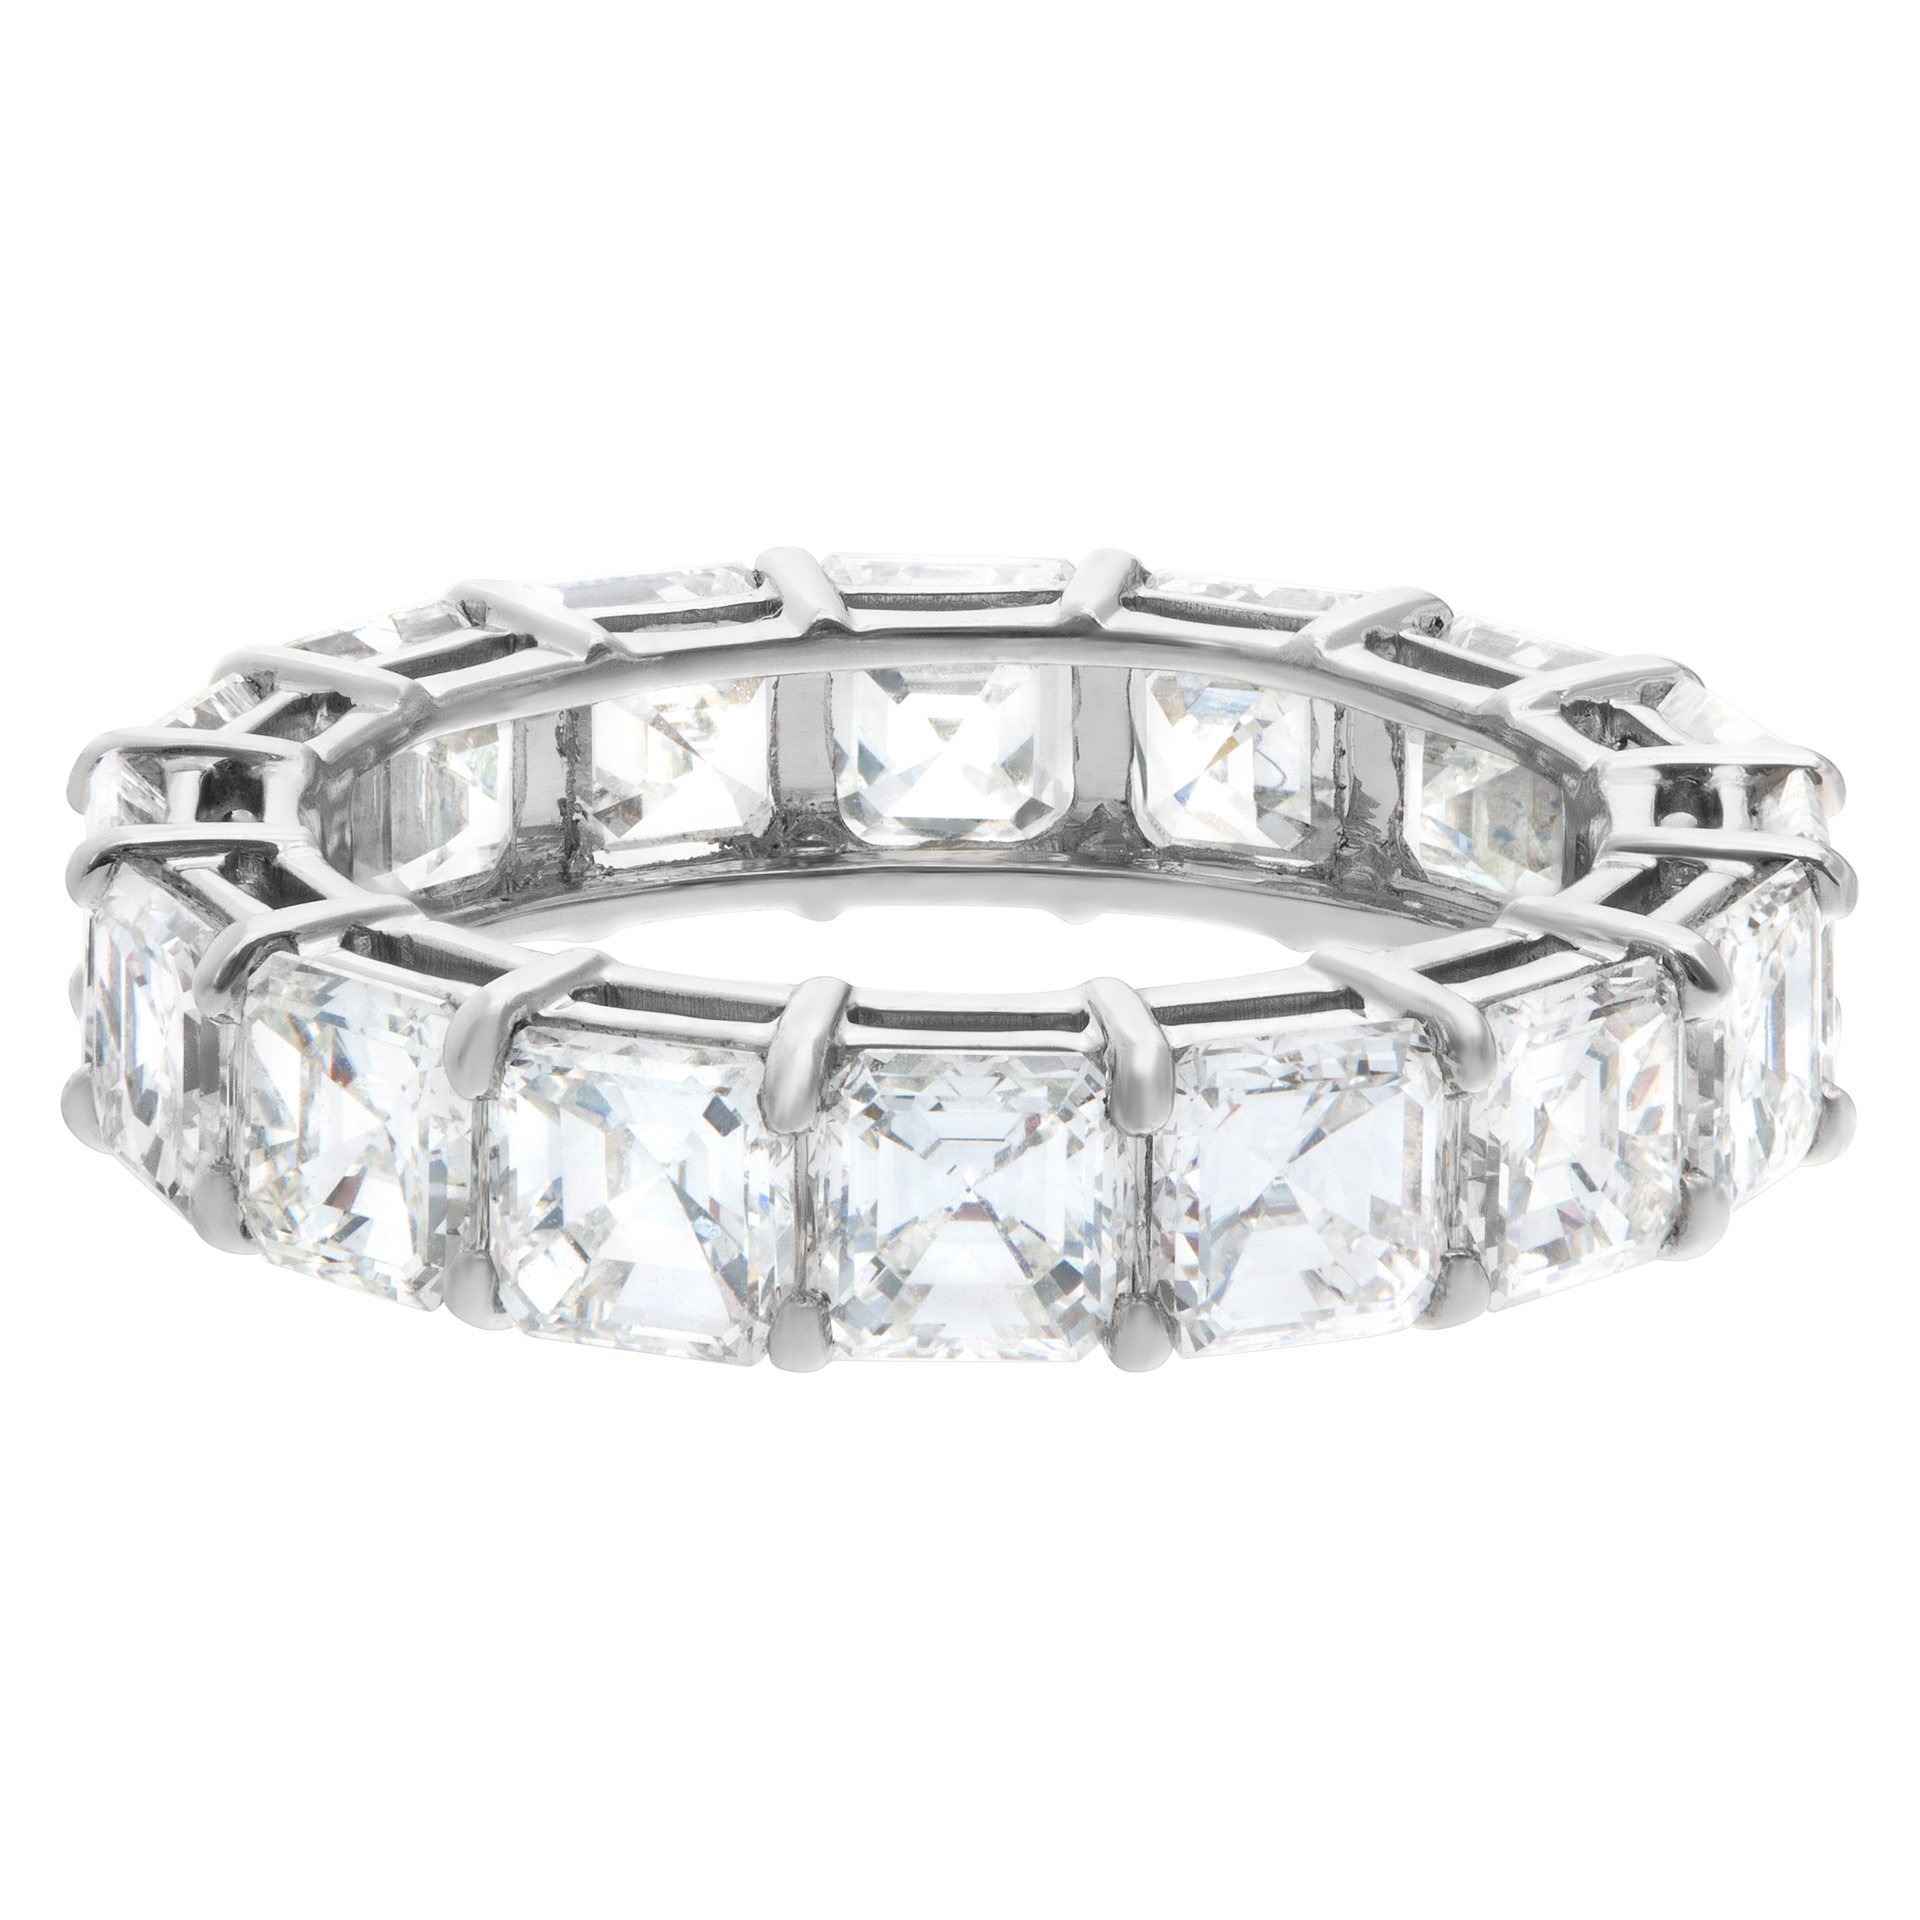 Diamond eternity band  asscher cut in platinum with 4.62 carats